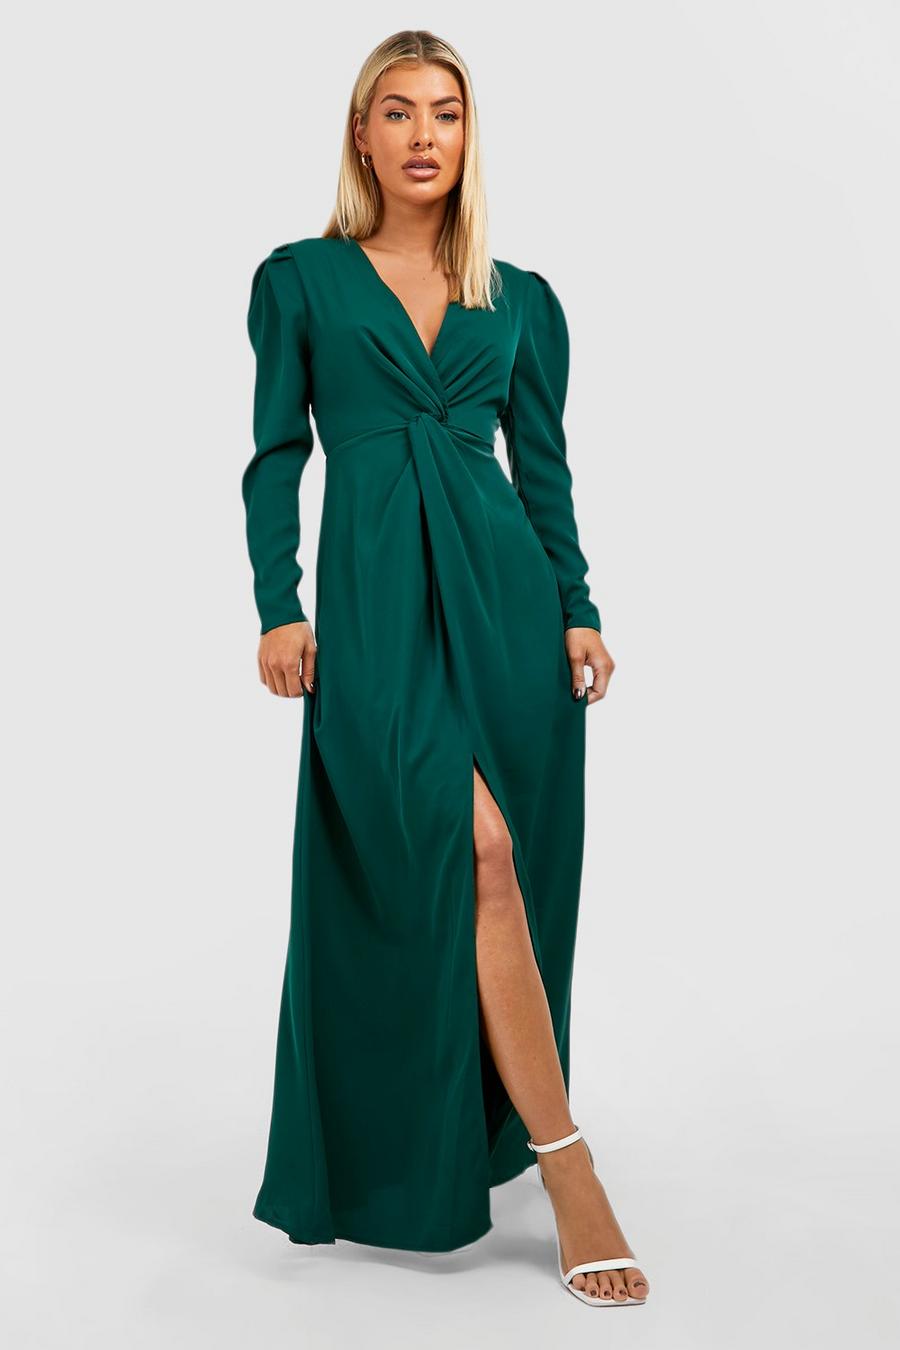 Emerald green Twist Front Detail Bridesmaid Dress 